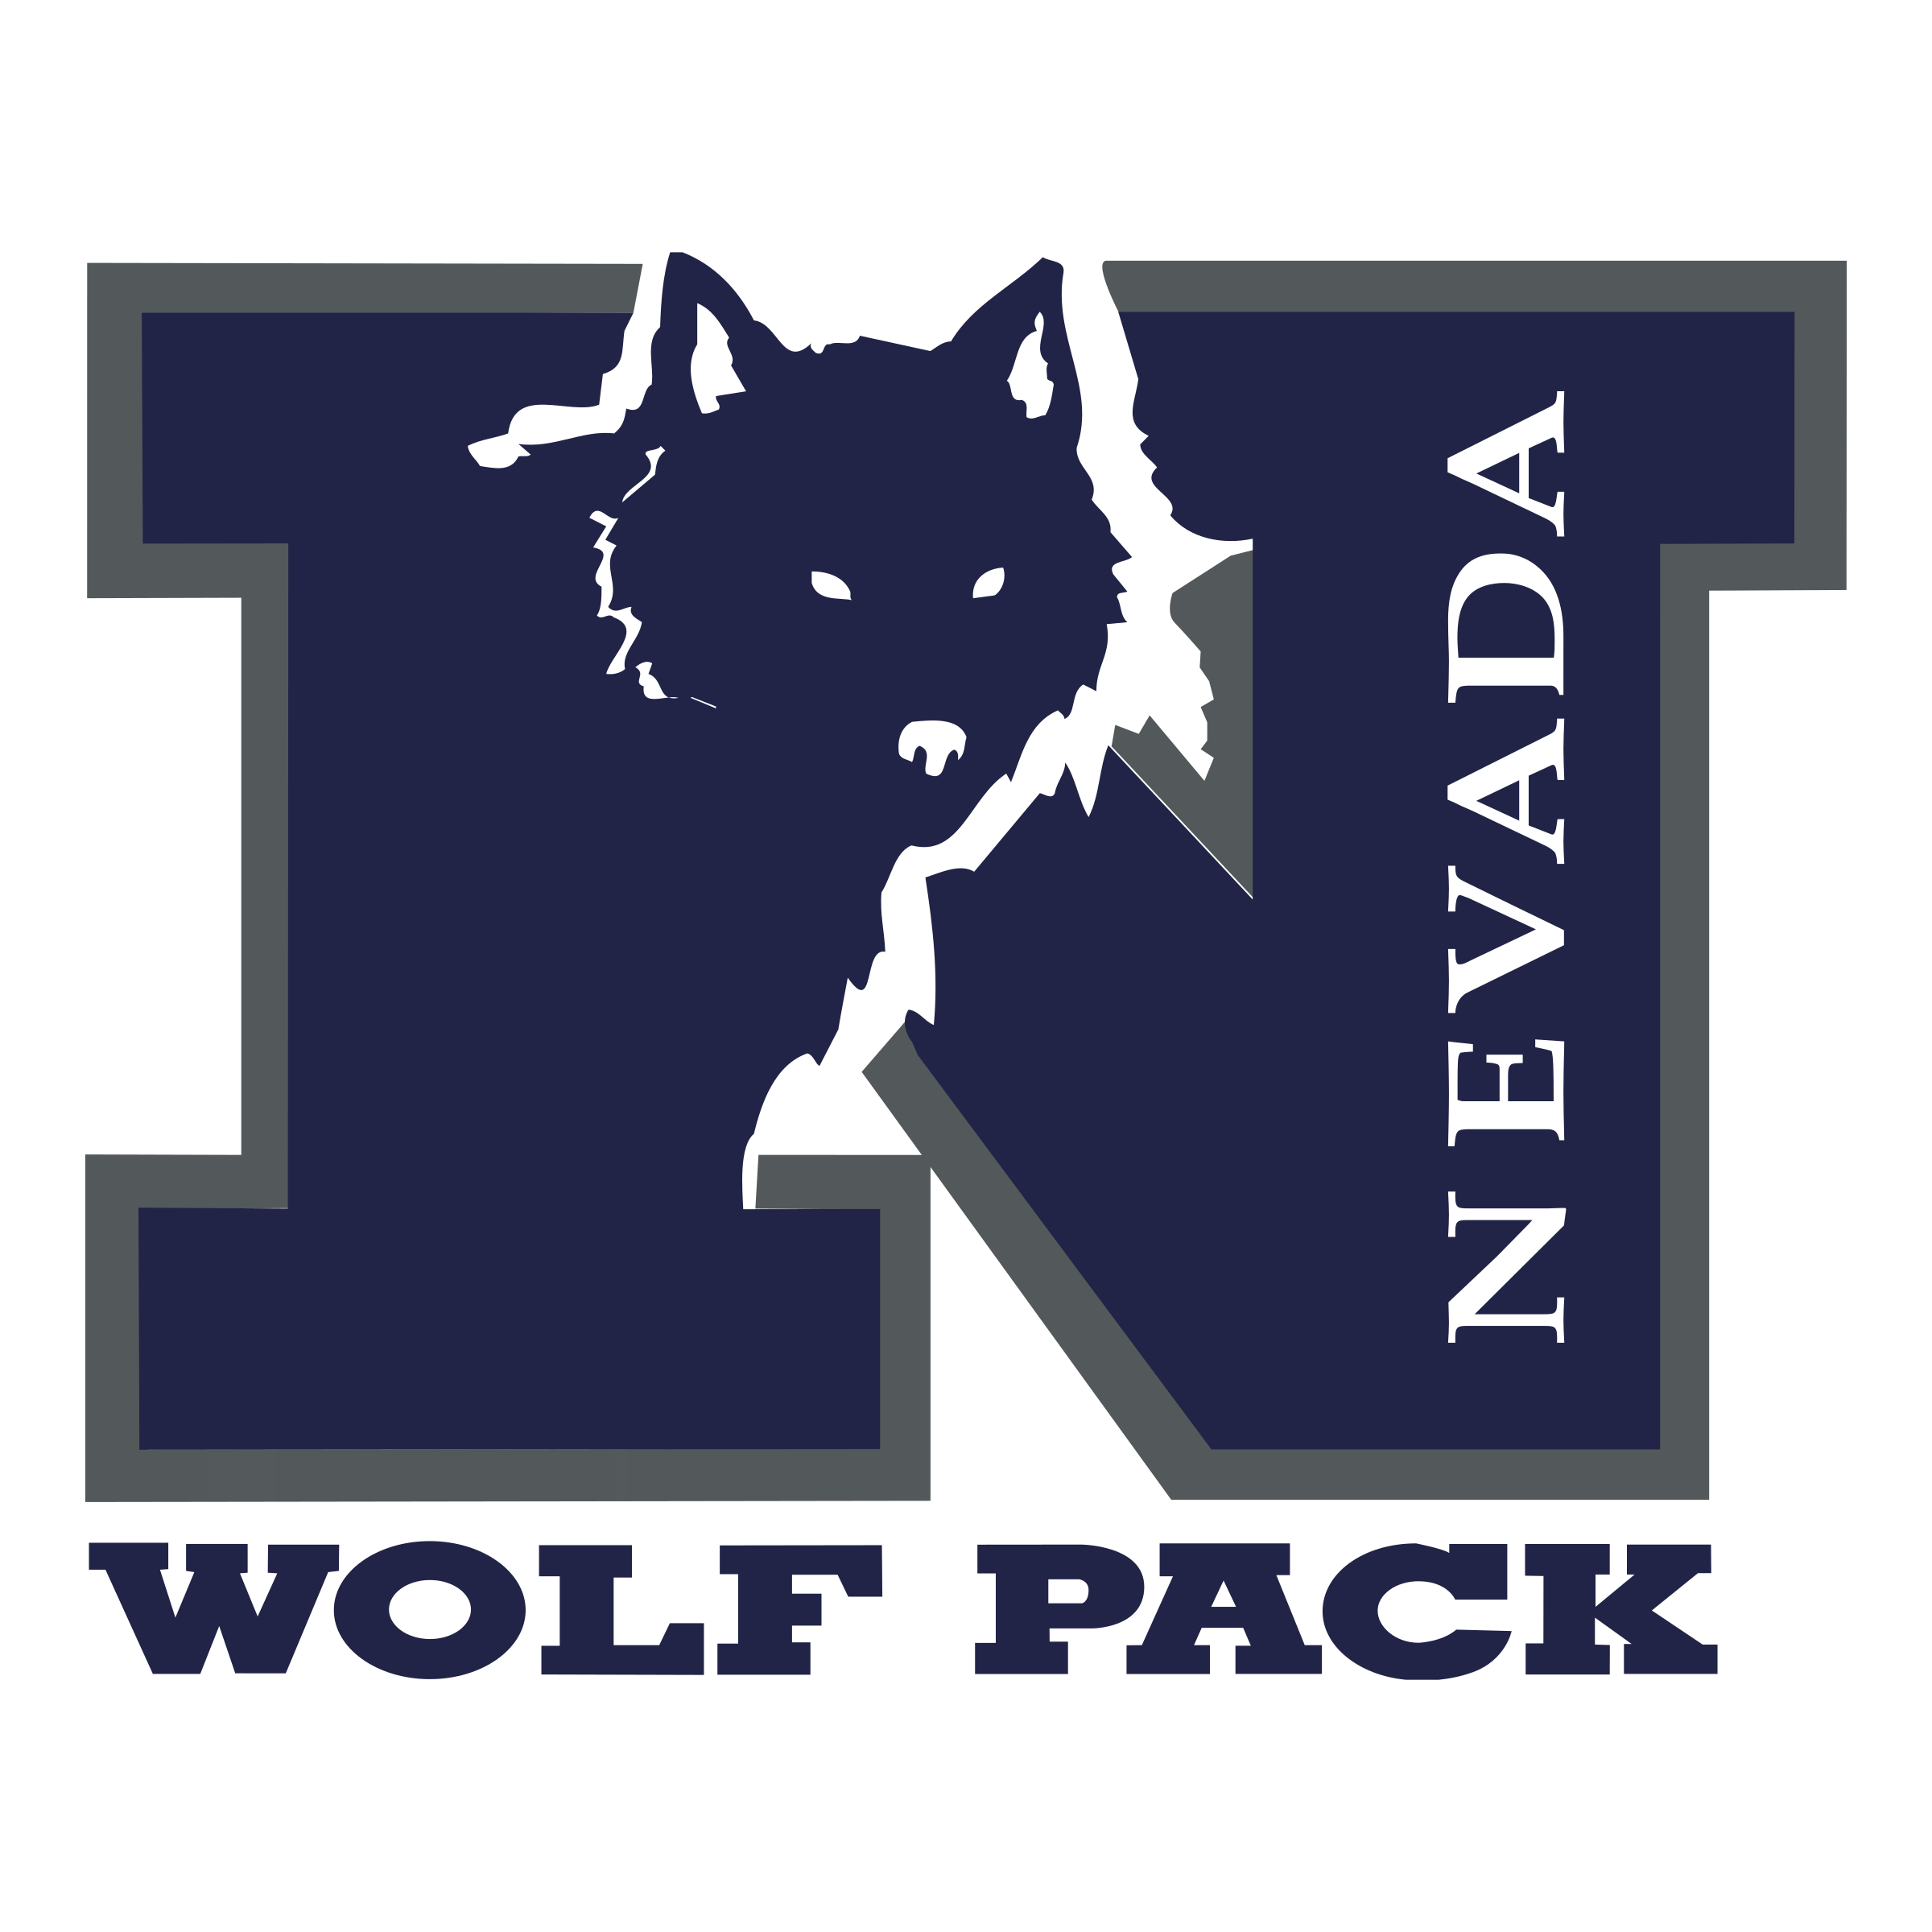 Nevada Wolf Pack Logo - Nevada Wolf Pack Logo PNG Transparent & SVG Vector - Freebie Supply